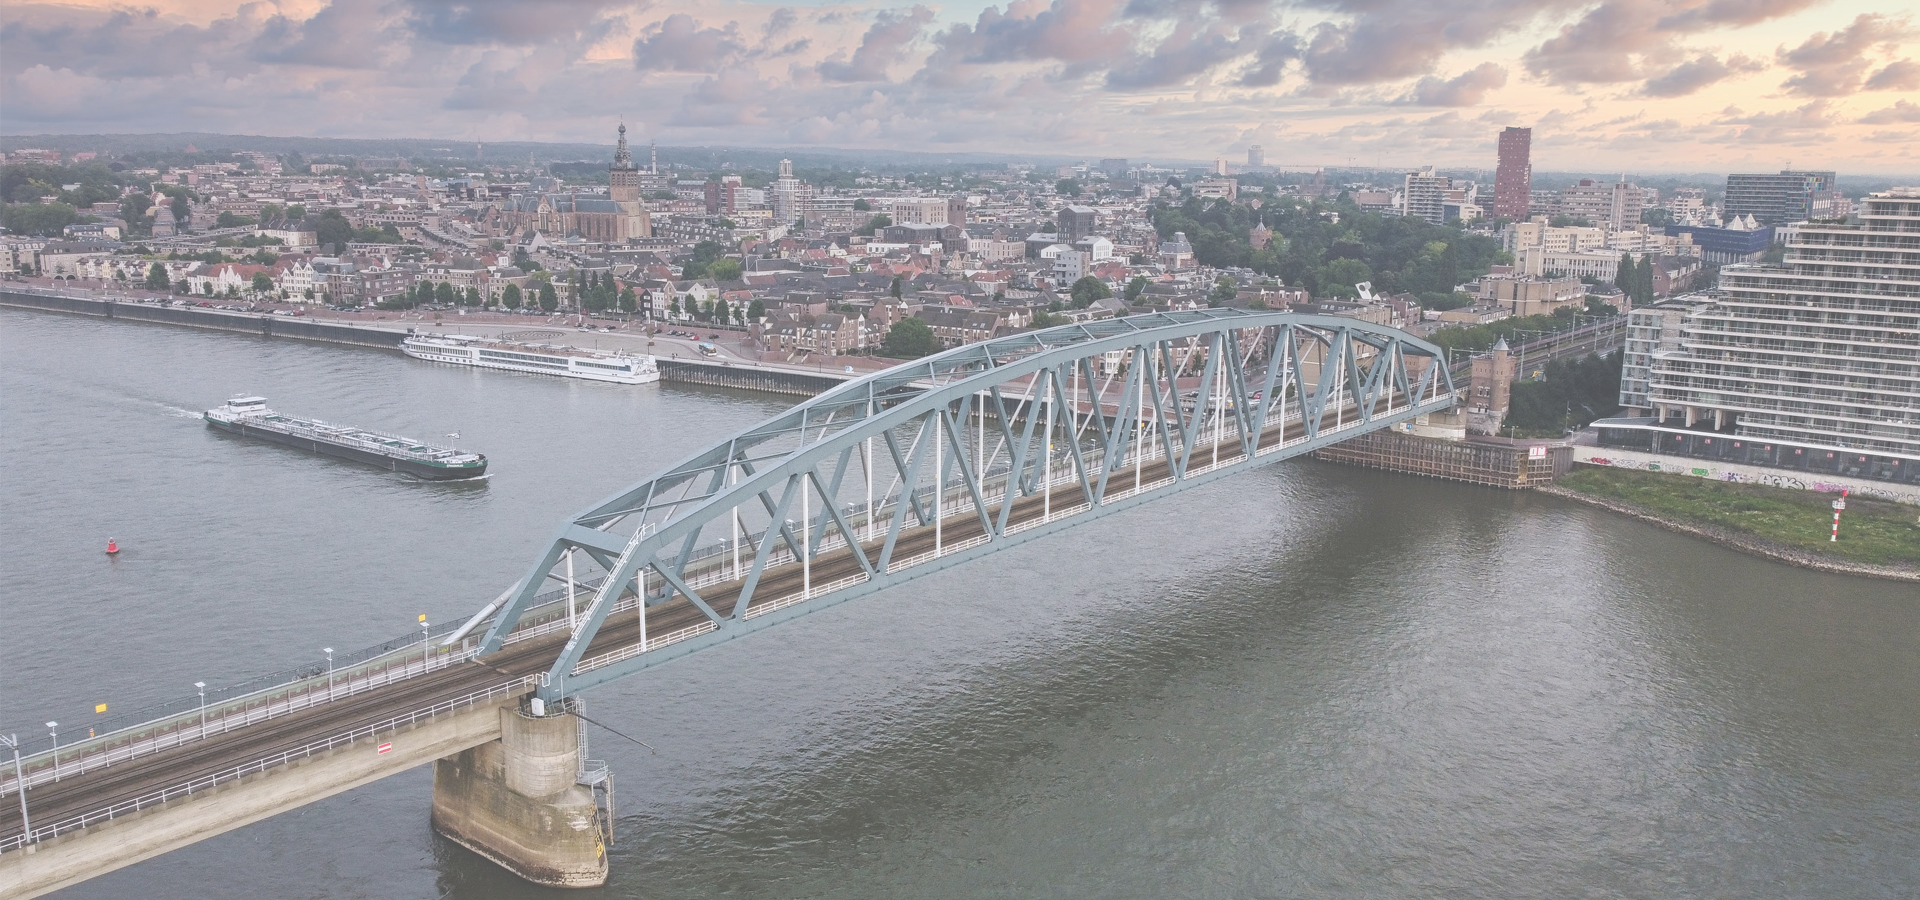 Nijmegen, Gelderland, The Netherlands